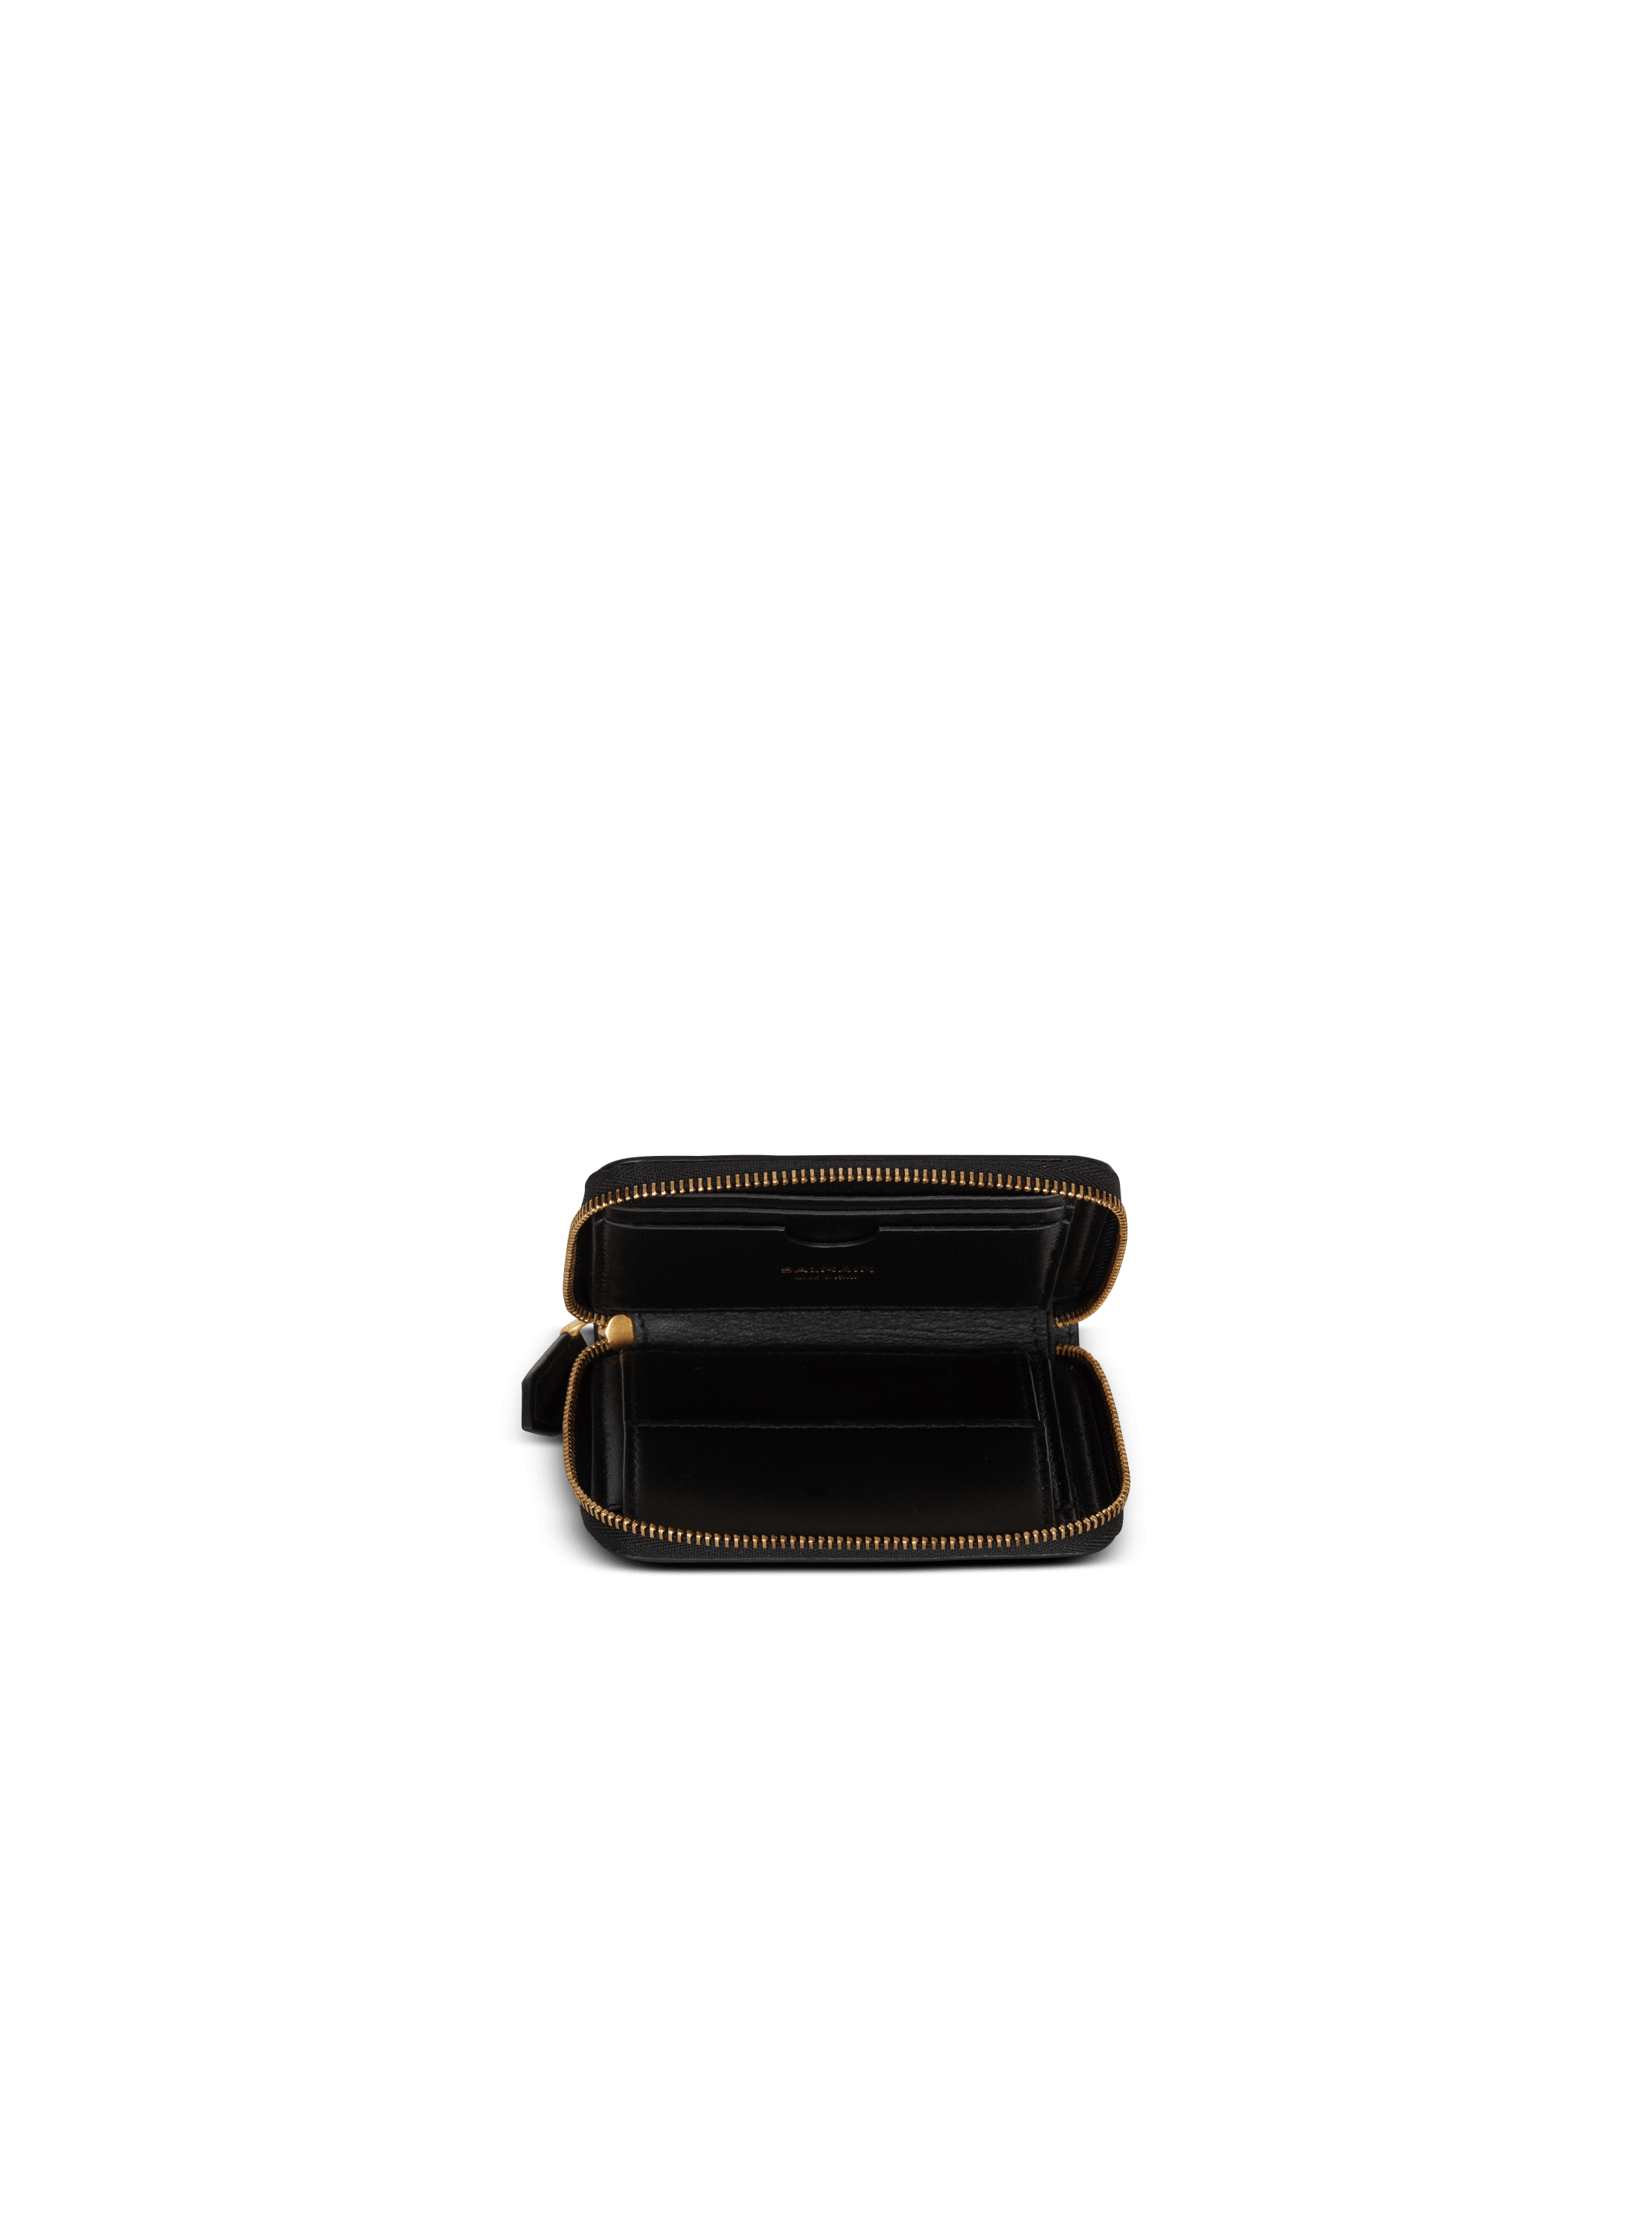 B-Buzz leather purse